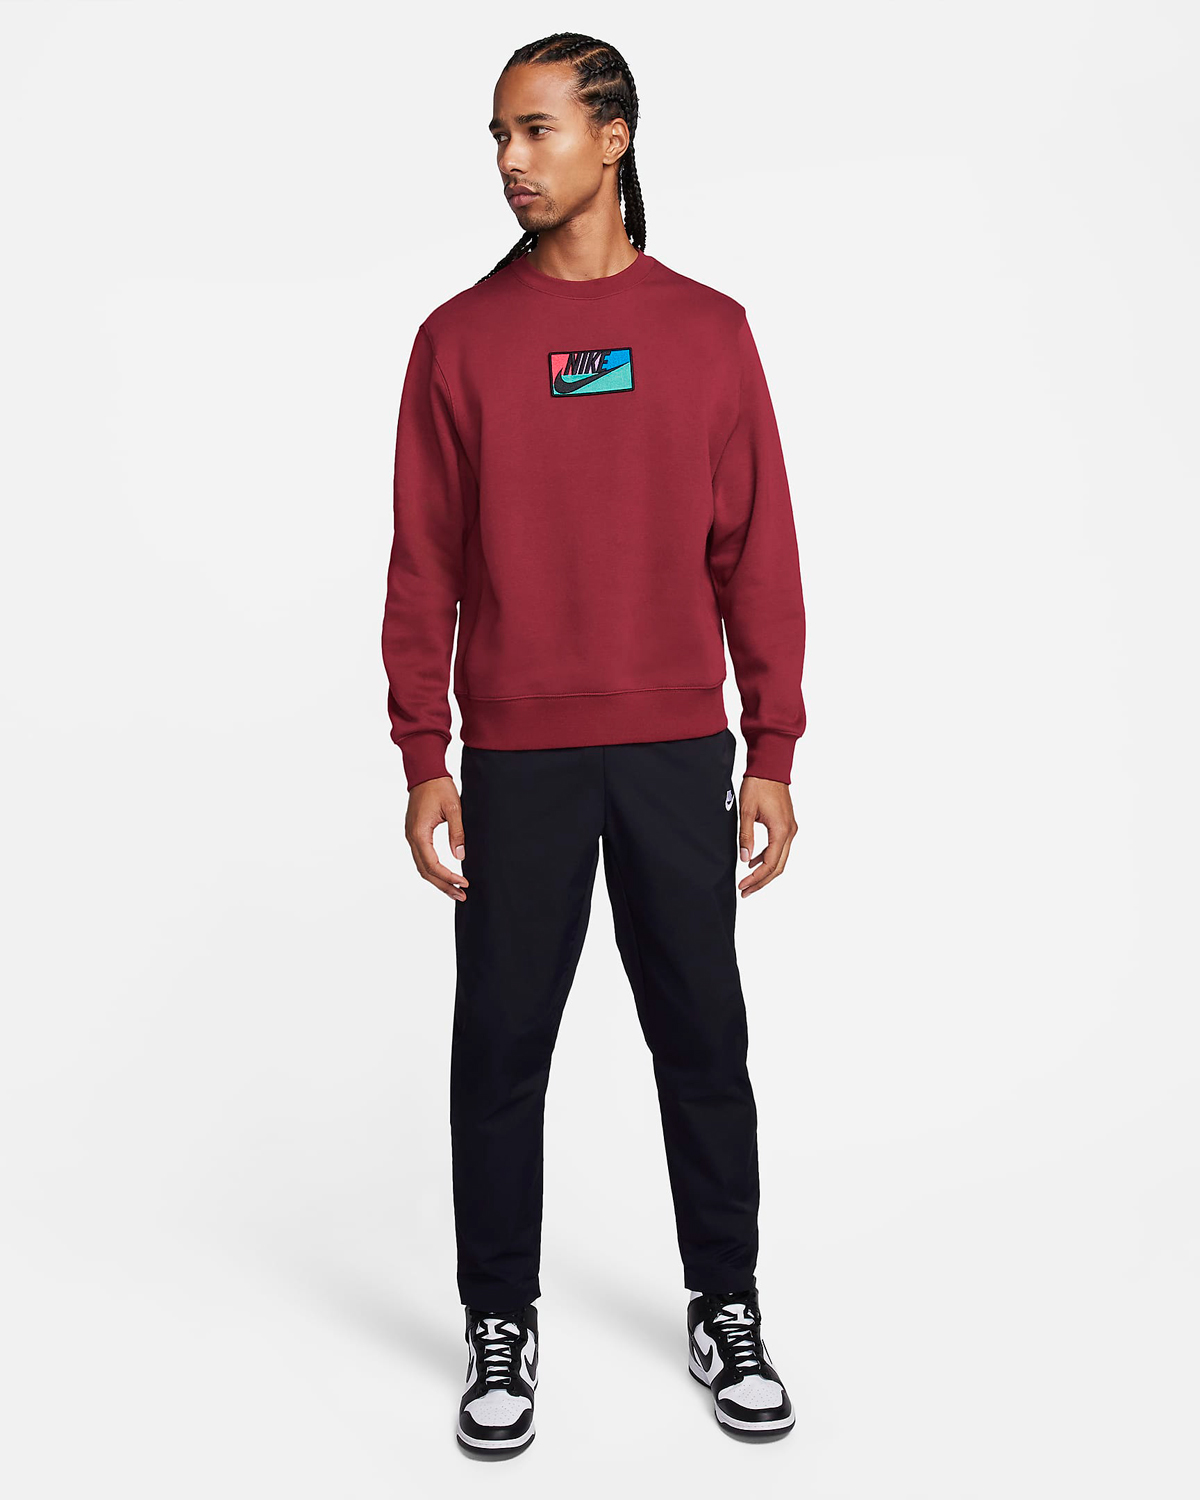 Nike-Club-Fleece-Patch-Crew-Sweatshirt-Team-Red-Outfit